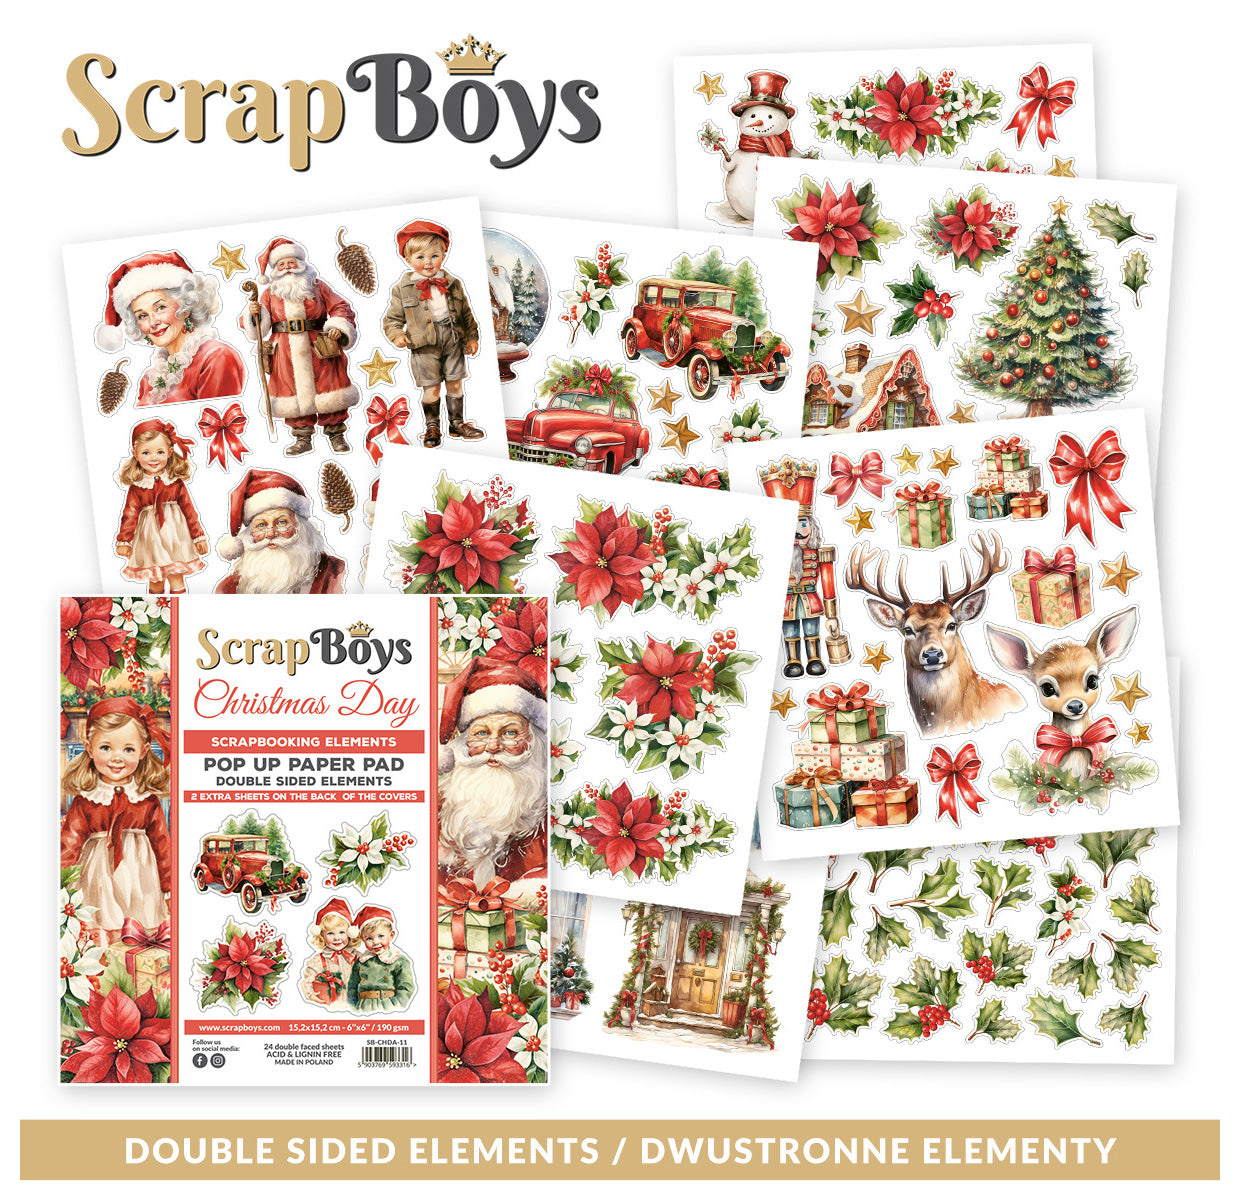 Scrap Boys Christmas Day Pop Up Paper Pad